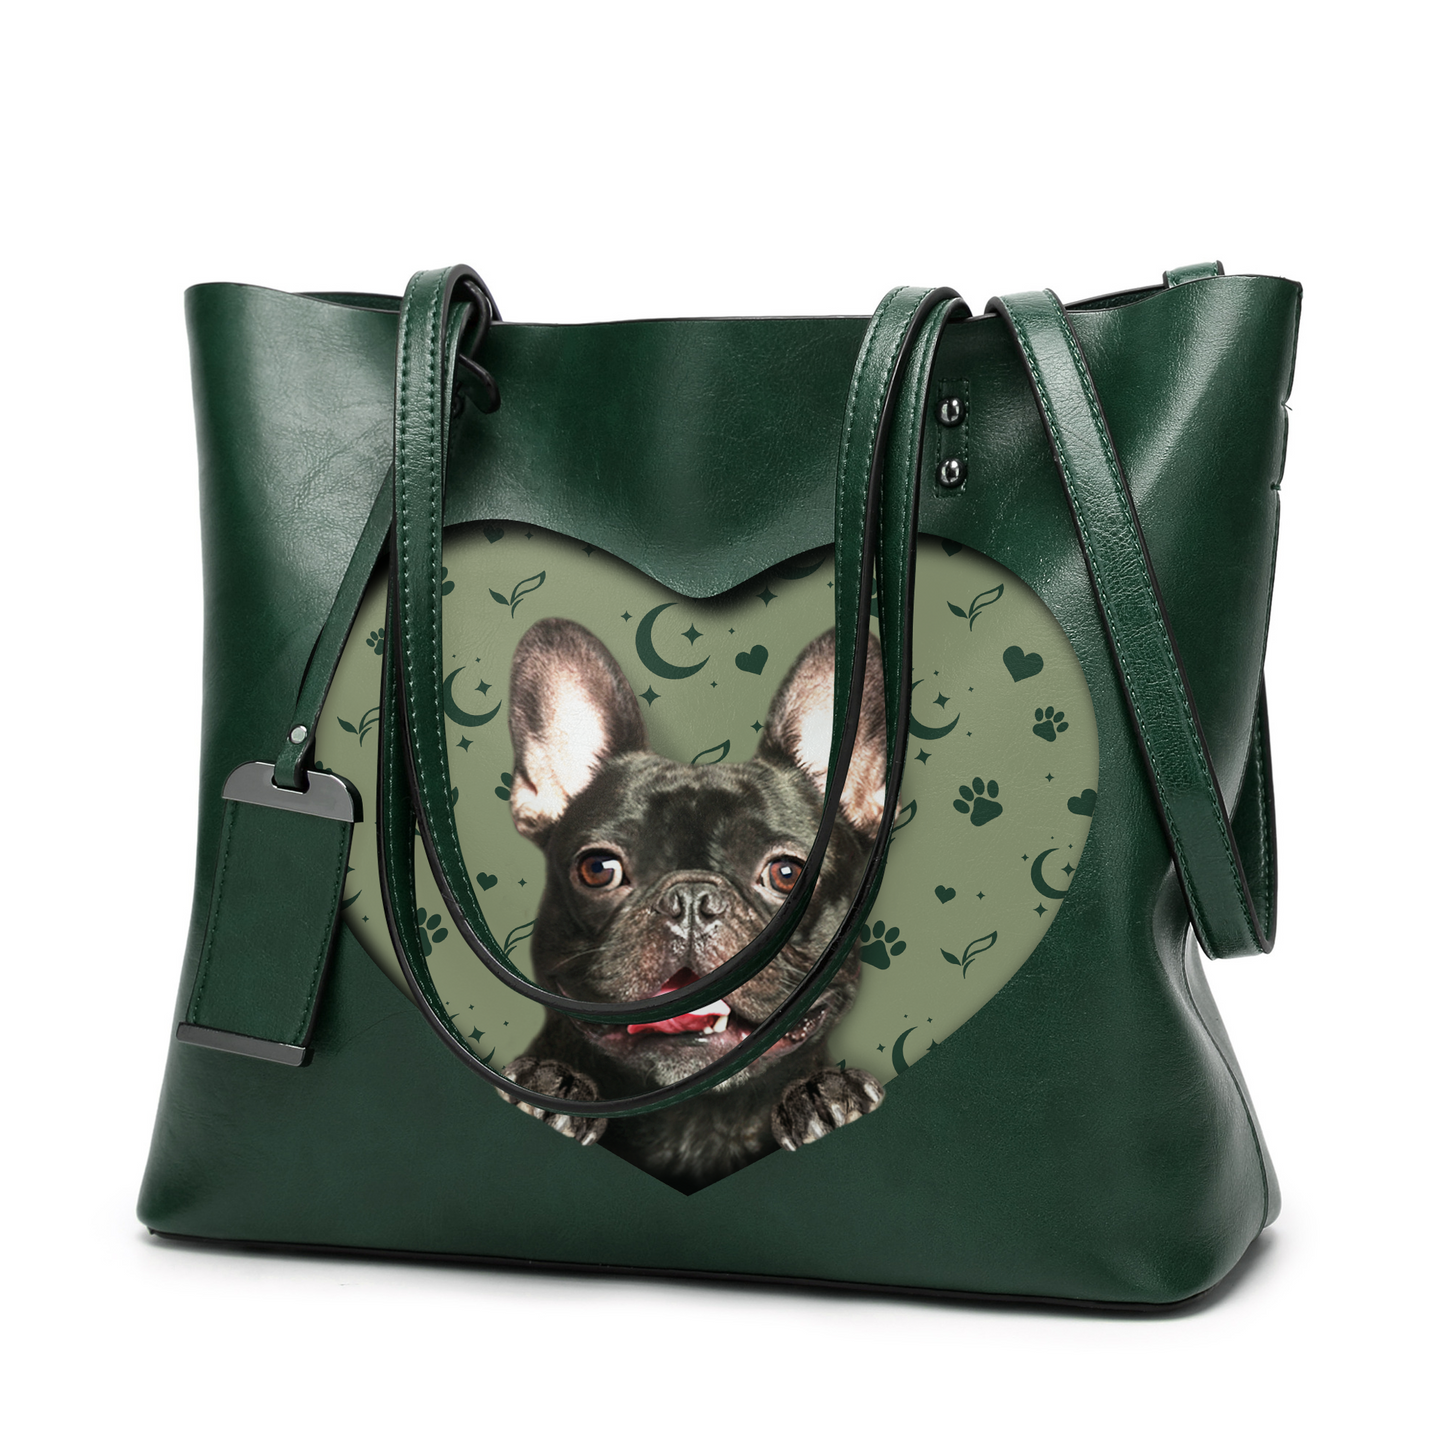 I Know I'm Cute - French Bulldog Glamour Handbag V2 - 12